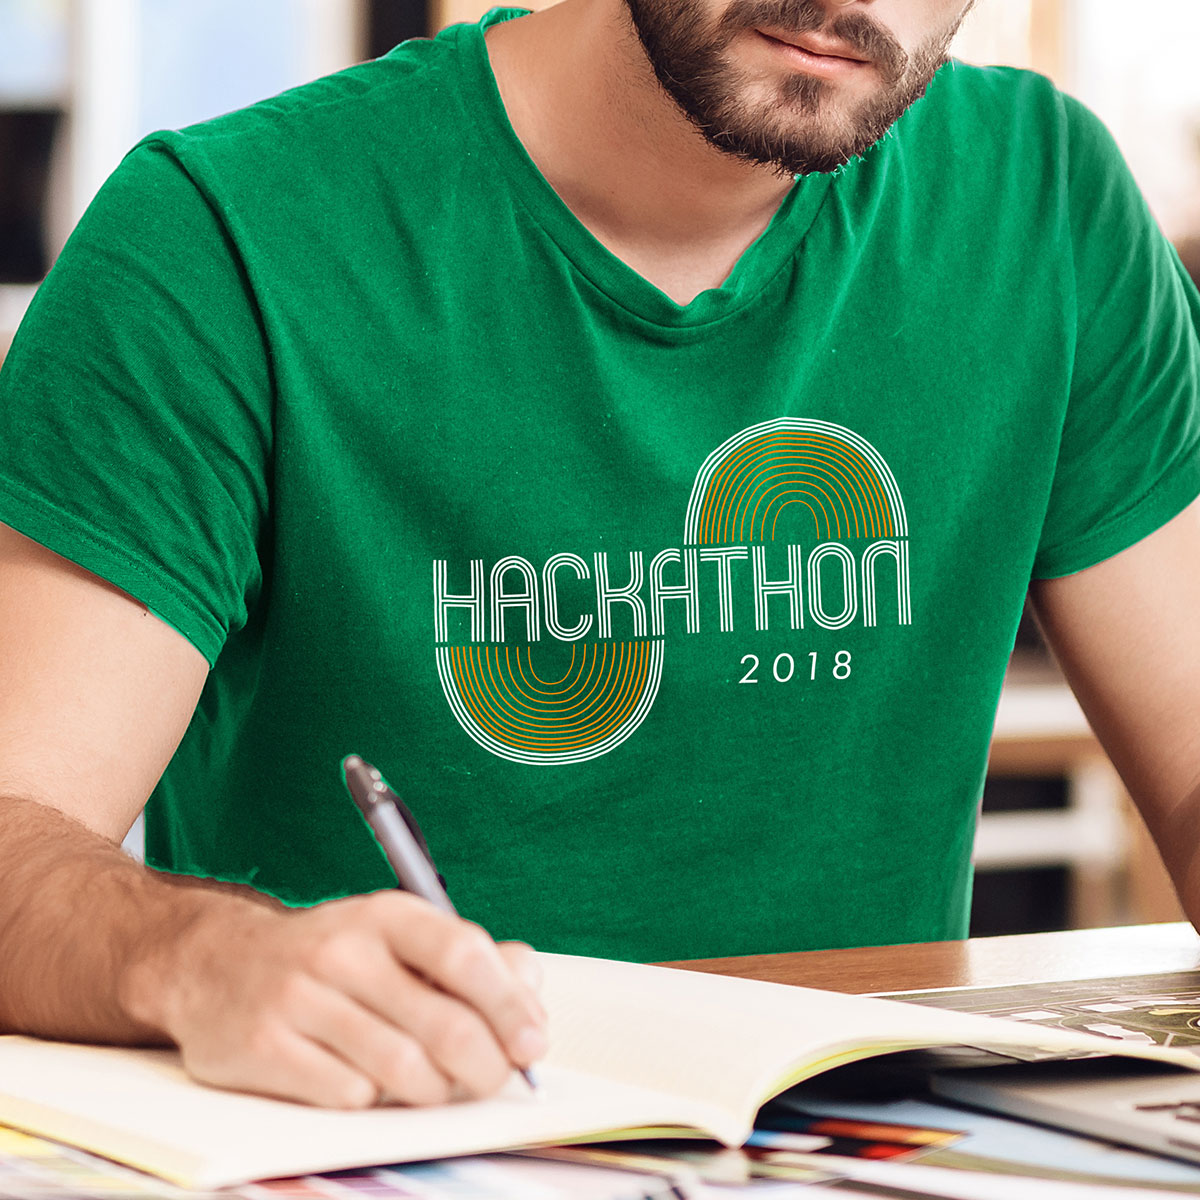 Oracle Data Cloud – Hackathon 2018: Man Wearing Green Retro T-Shirt Design